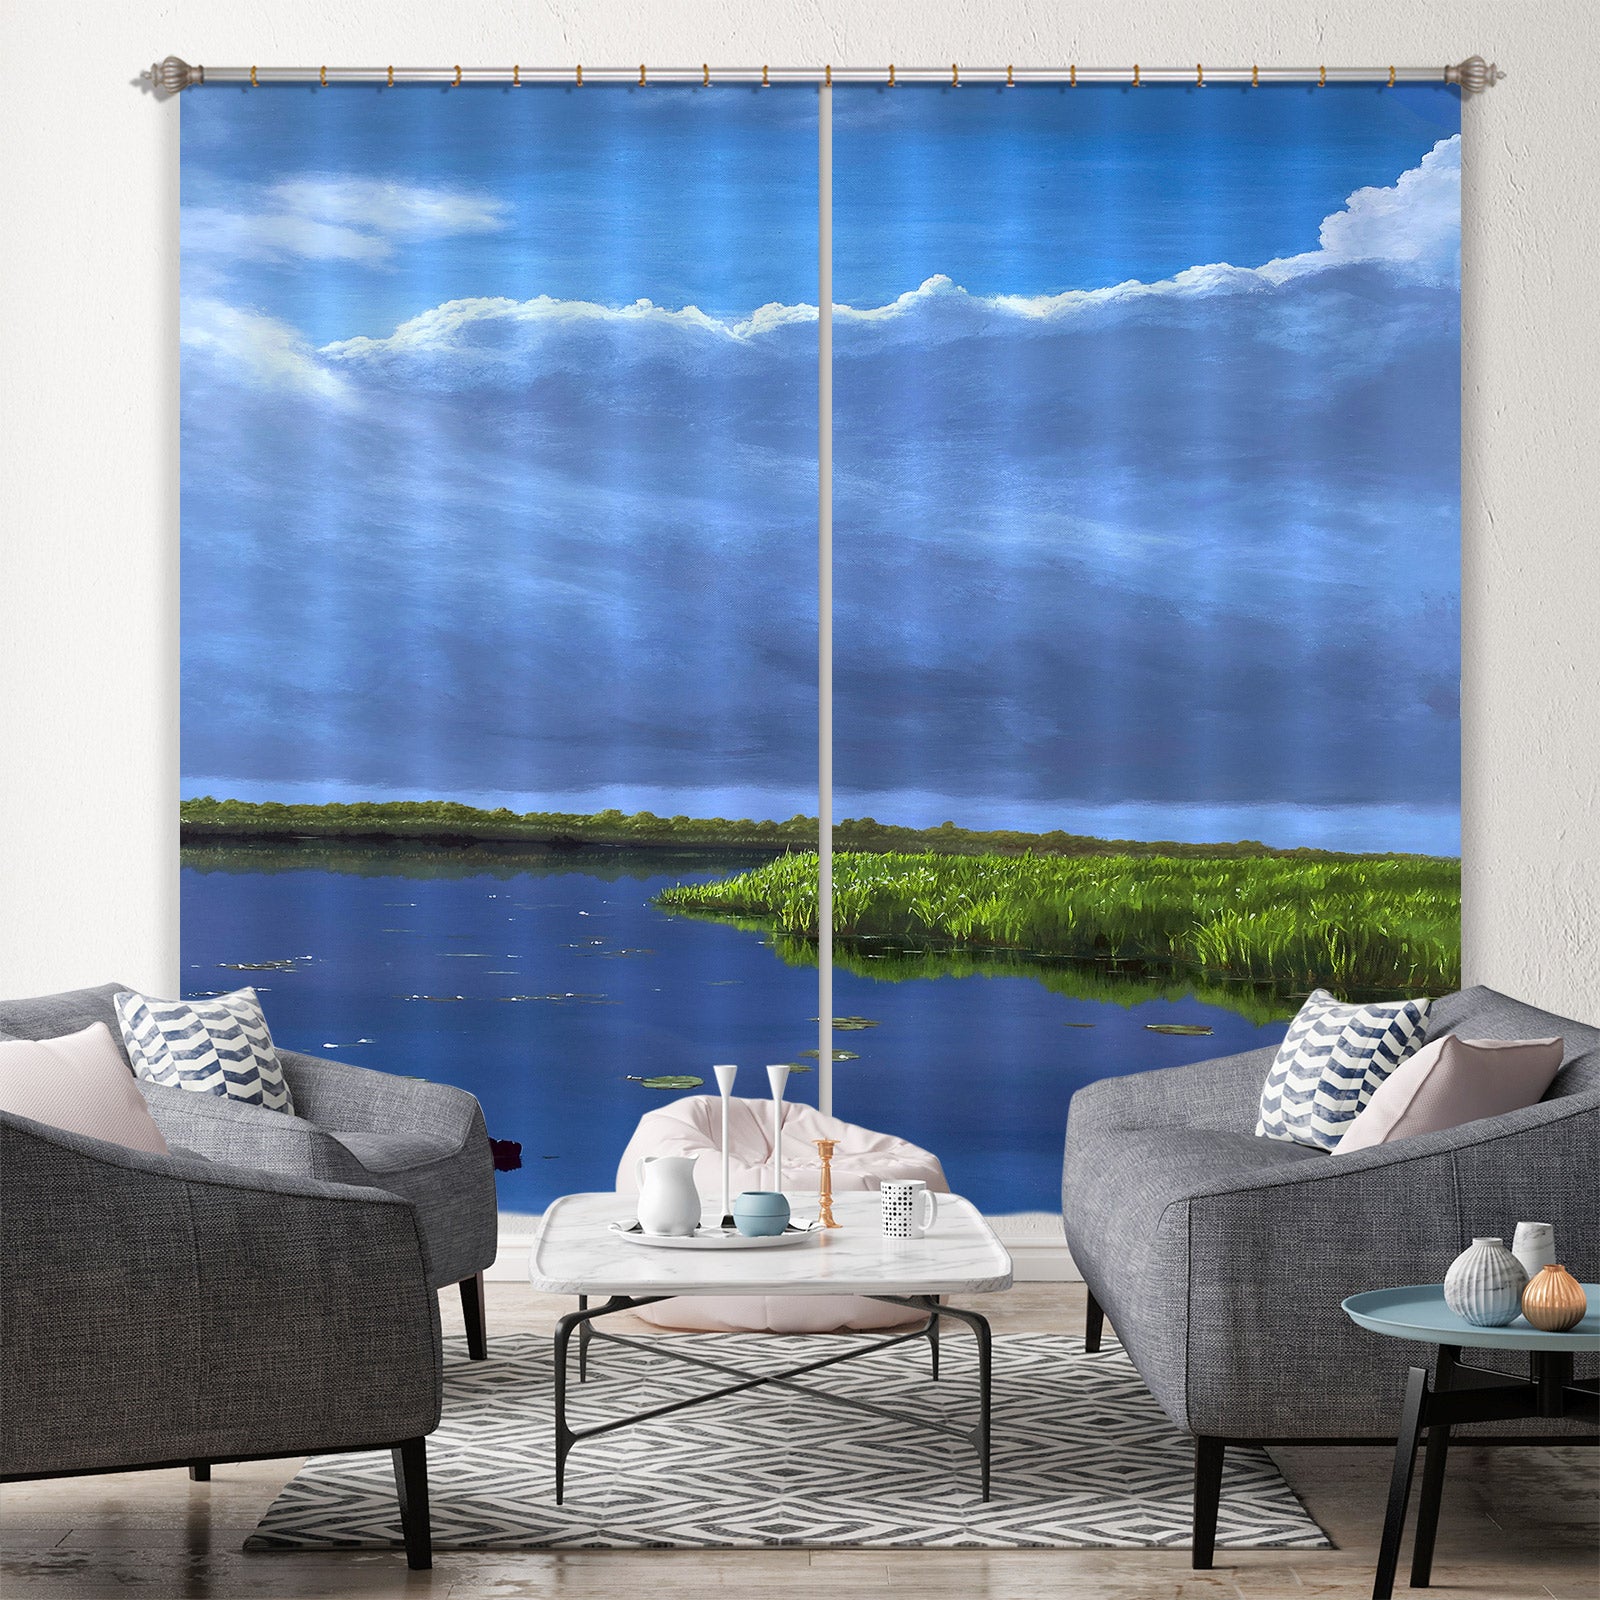 3D Lakeside Meadow 9763 Marina Zotova Curtain Curtains Drapes